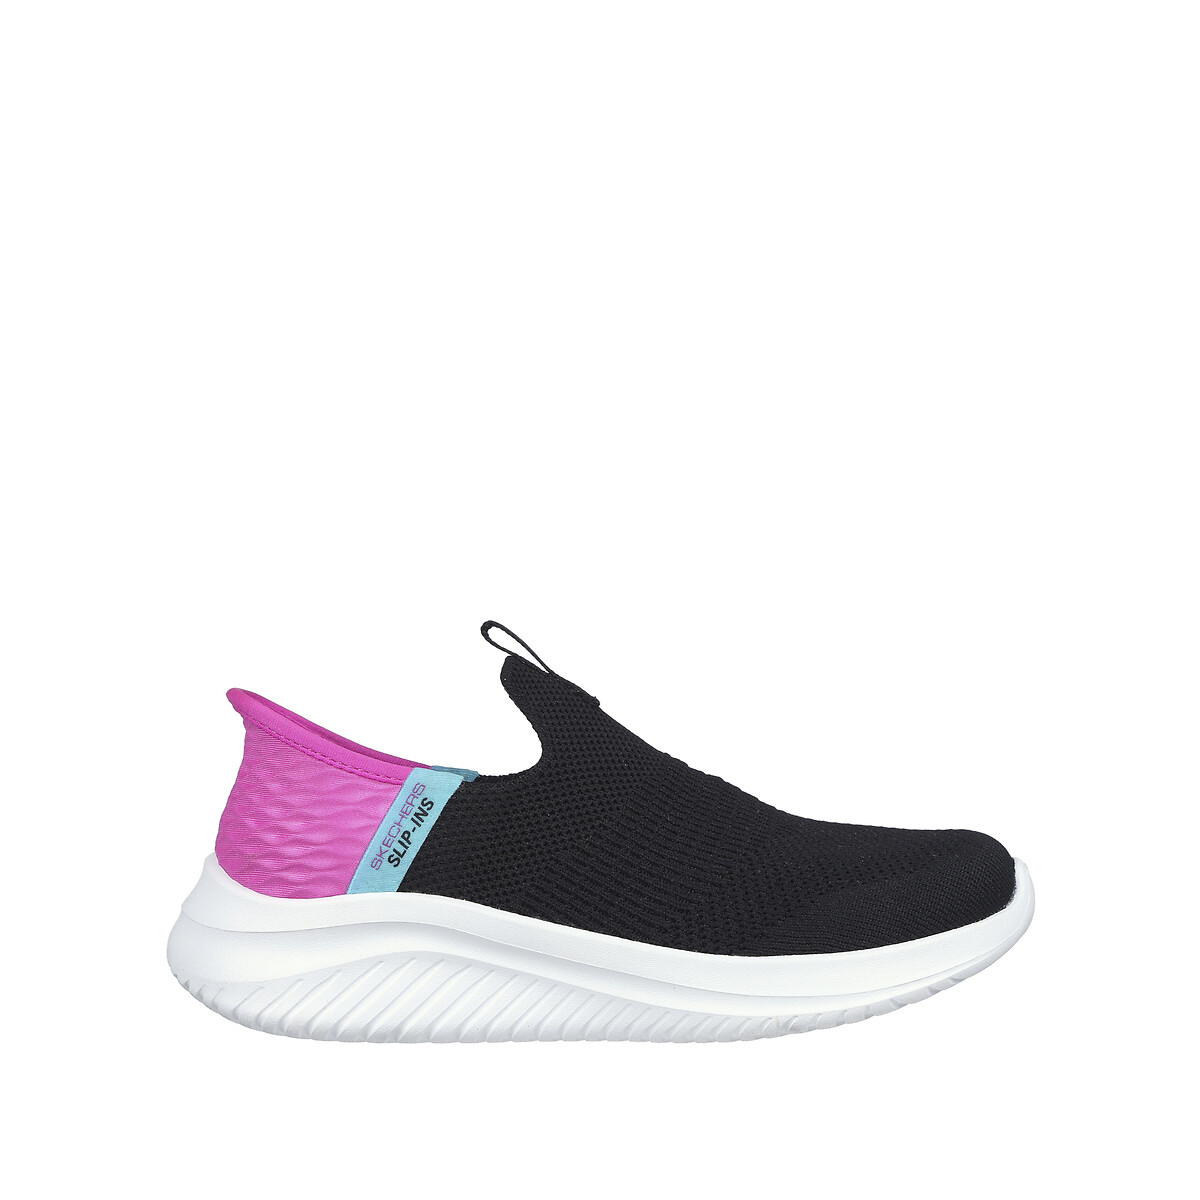 Sneakers Ultra Flex 3.0 von Skechers